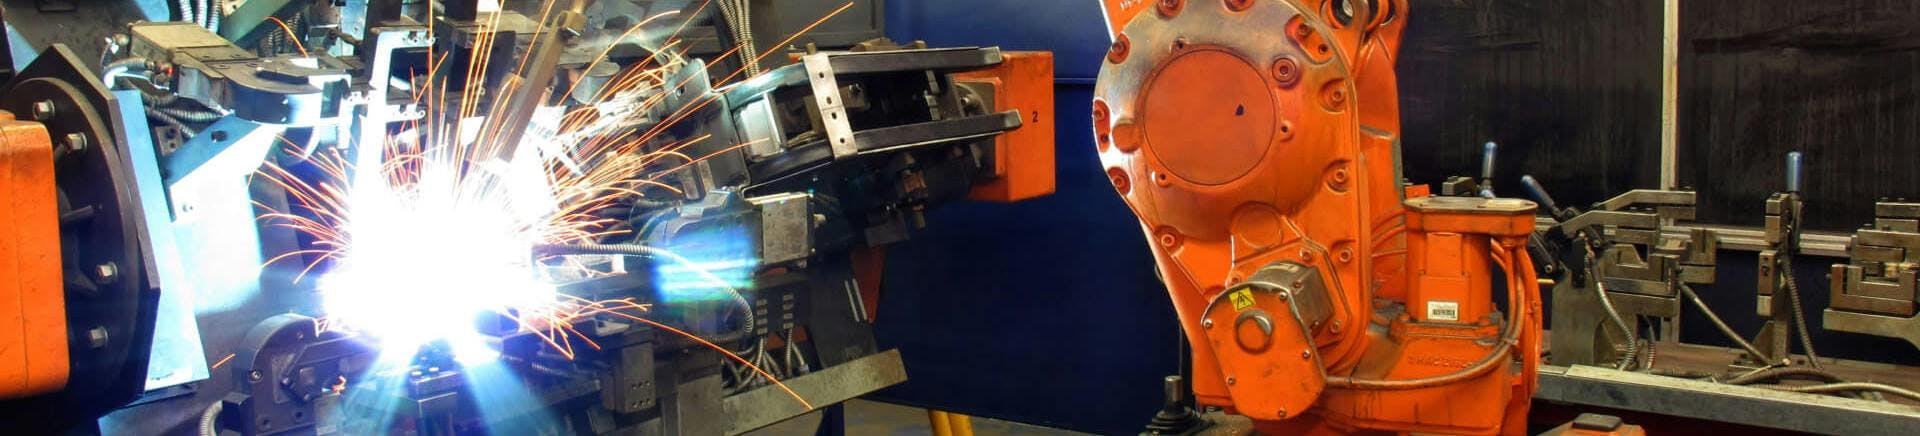 Célula de solda robotizada da Metalúrgica Paschoal